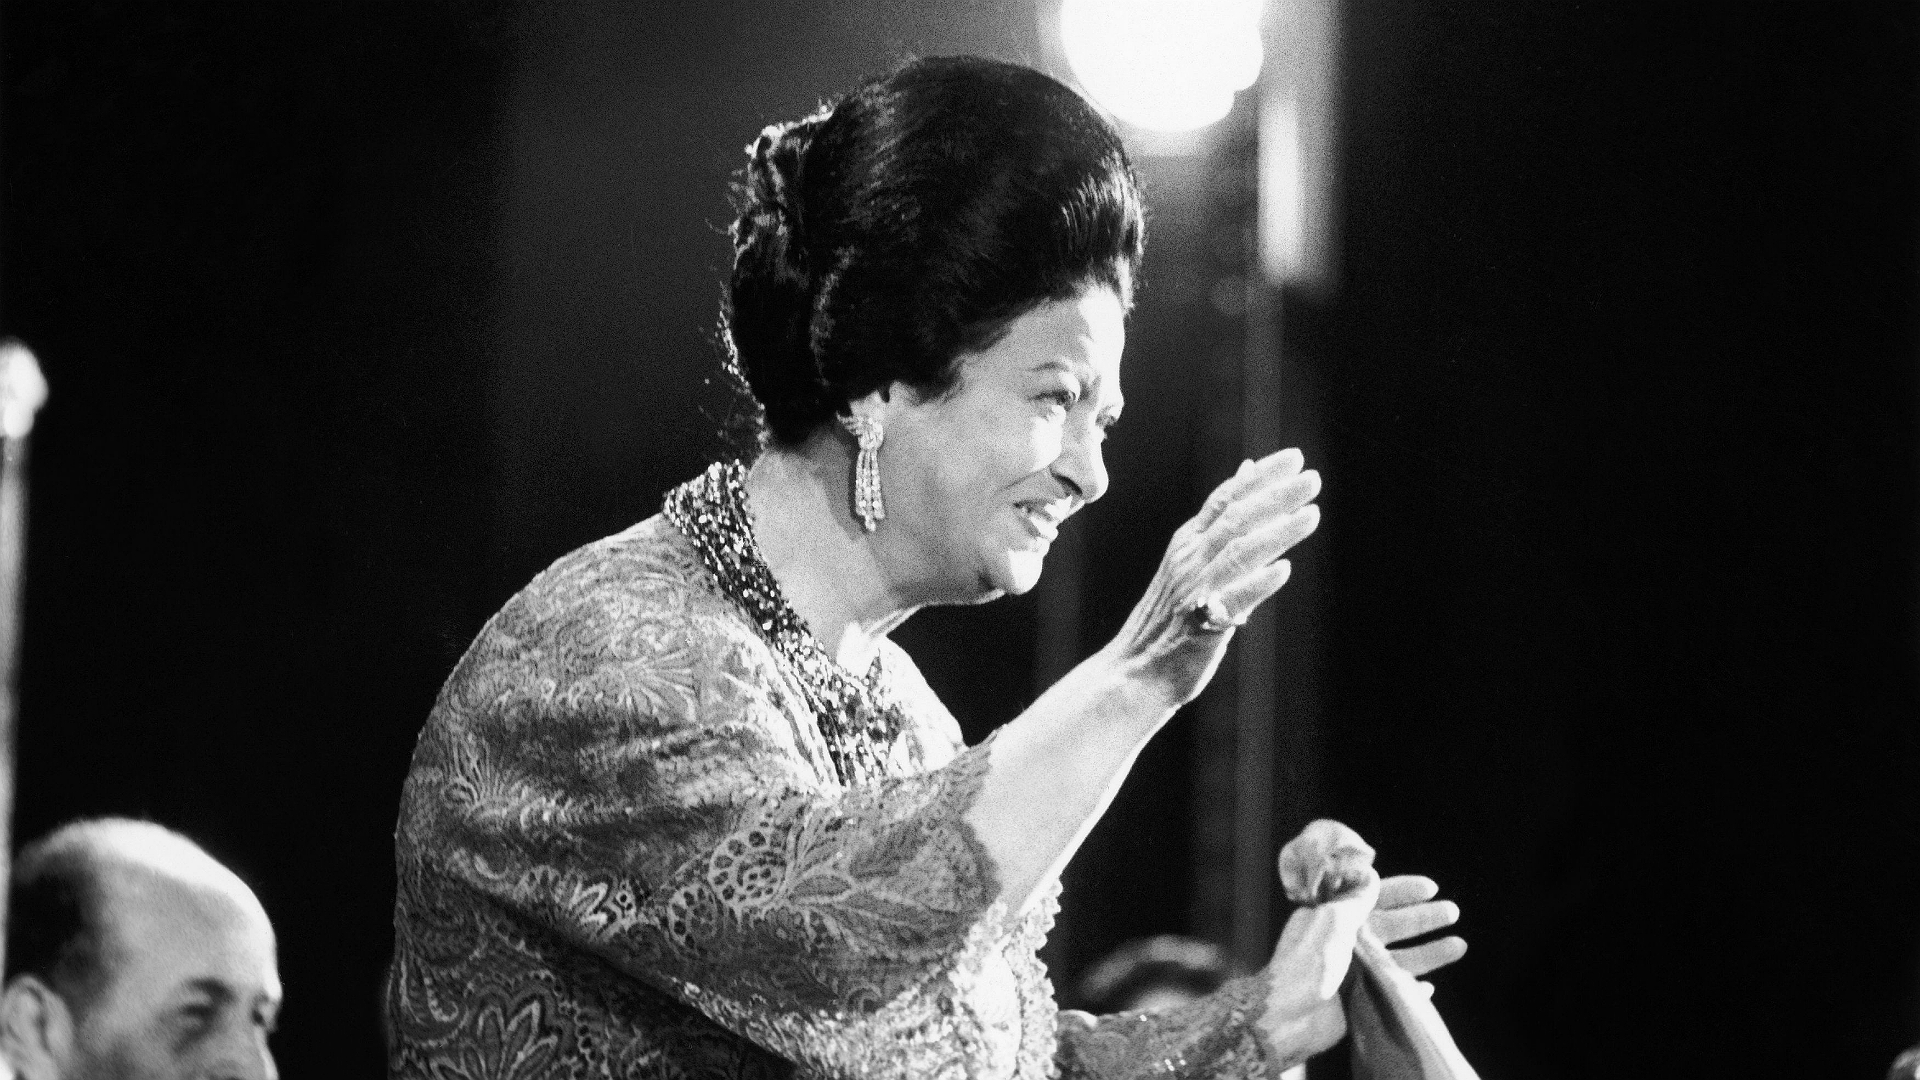 London Pays Musical Tribute To Egyptian Singer Umm Kulthum